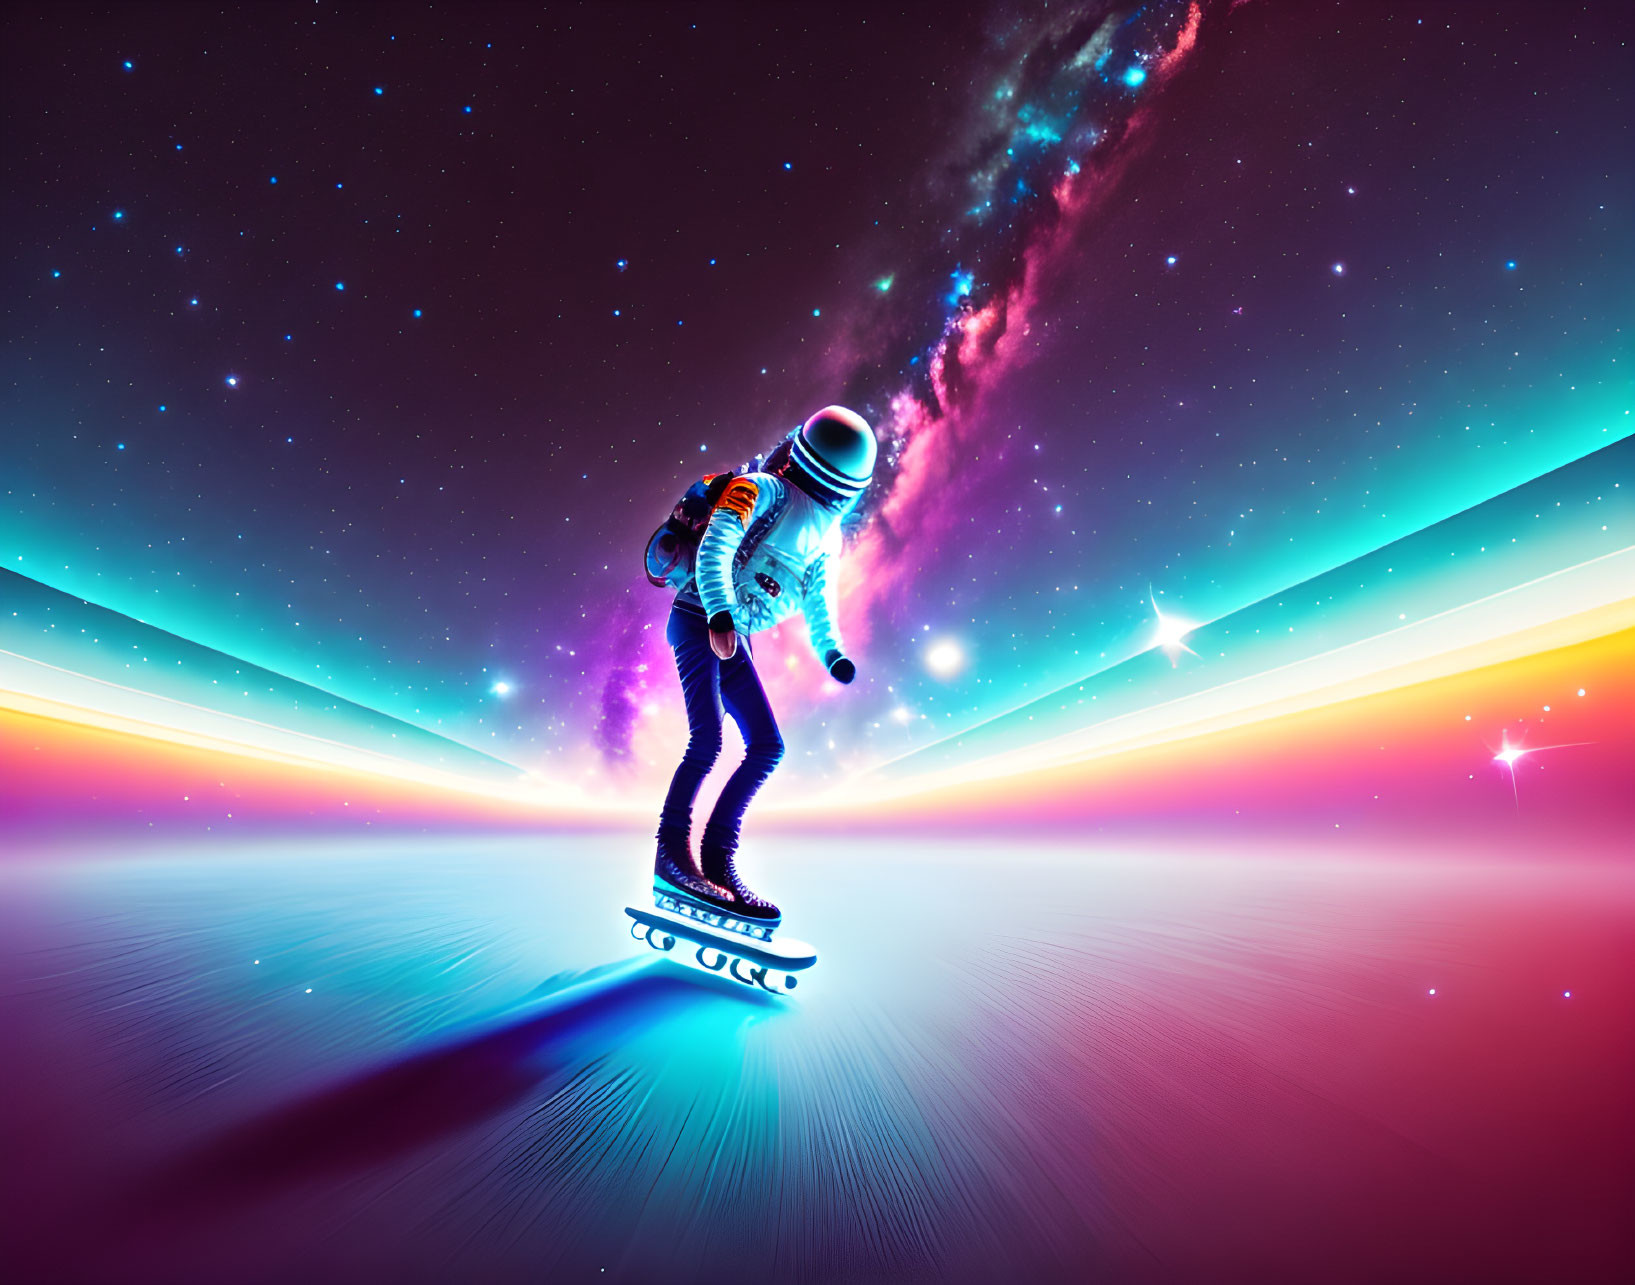 Astronaut skateboards through cosmic light trail with vibrant nebula.